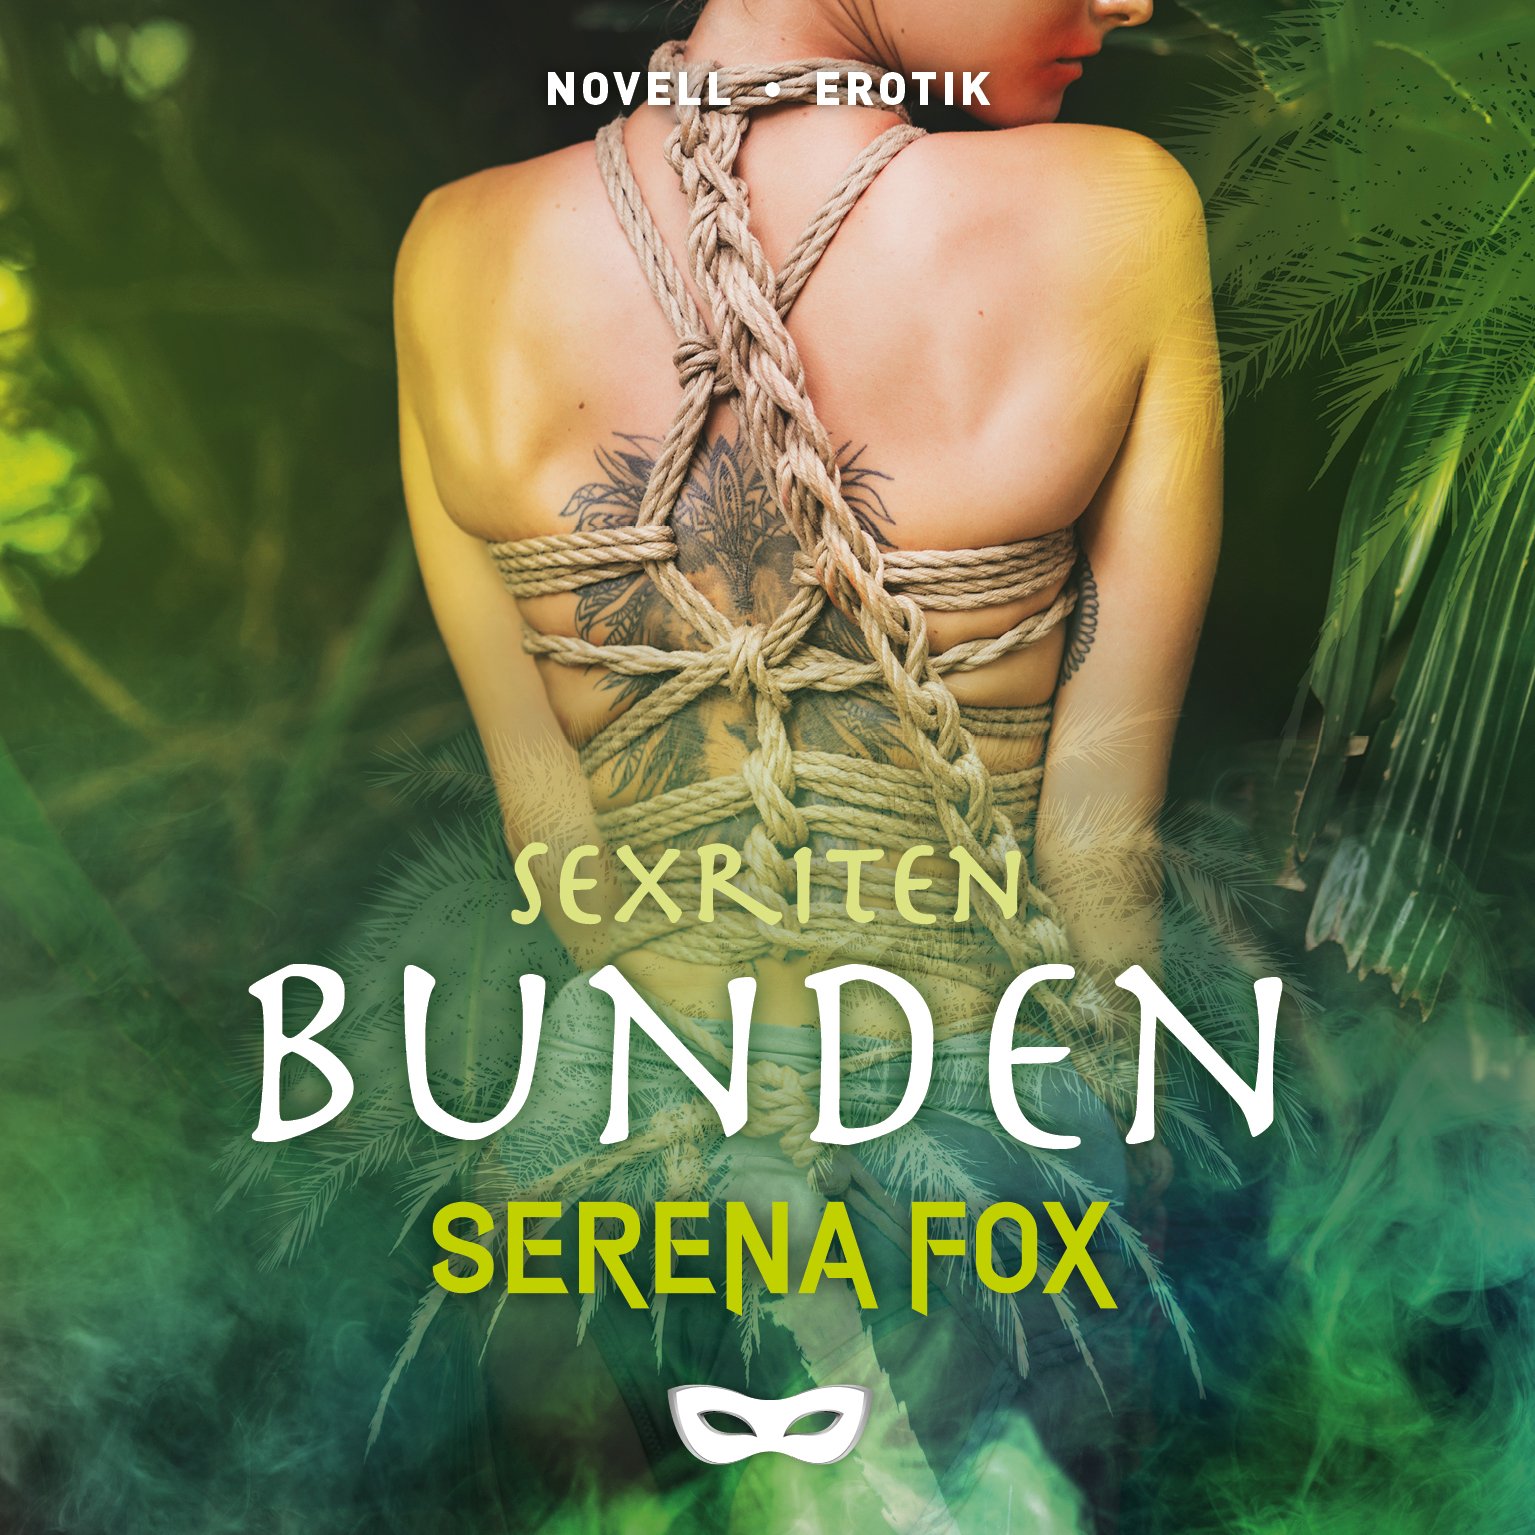 RITEN9 Bunden Serena Fox omslag audio.jpg